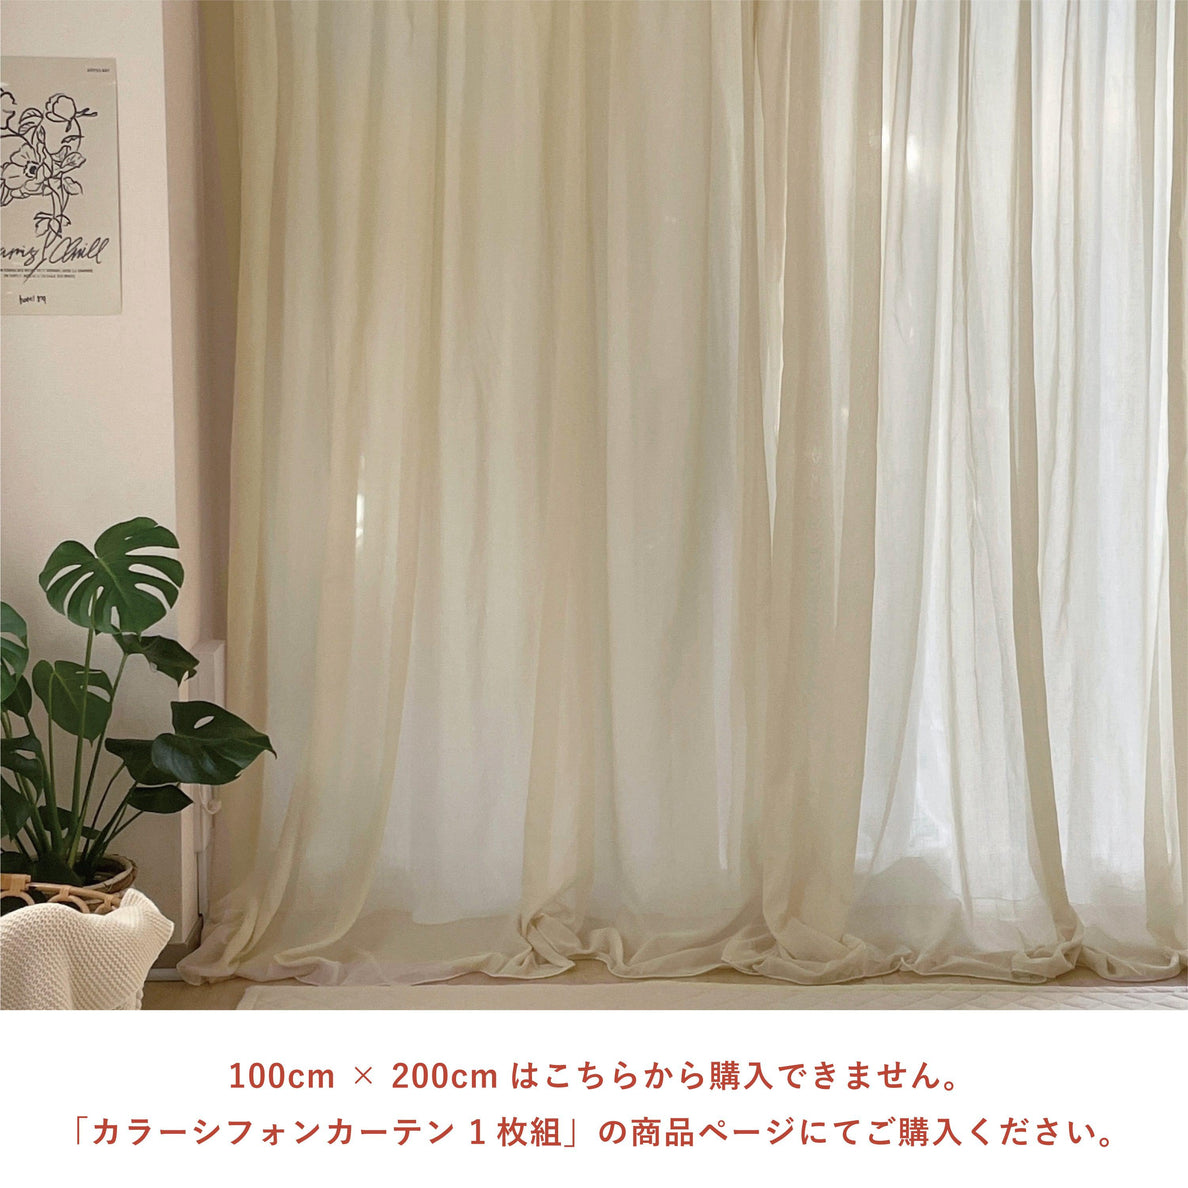 OR-1702-Little Rooms-セミオーダーサイズ｜カラーシフォンカーテン クリーム 1枚